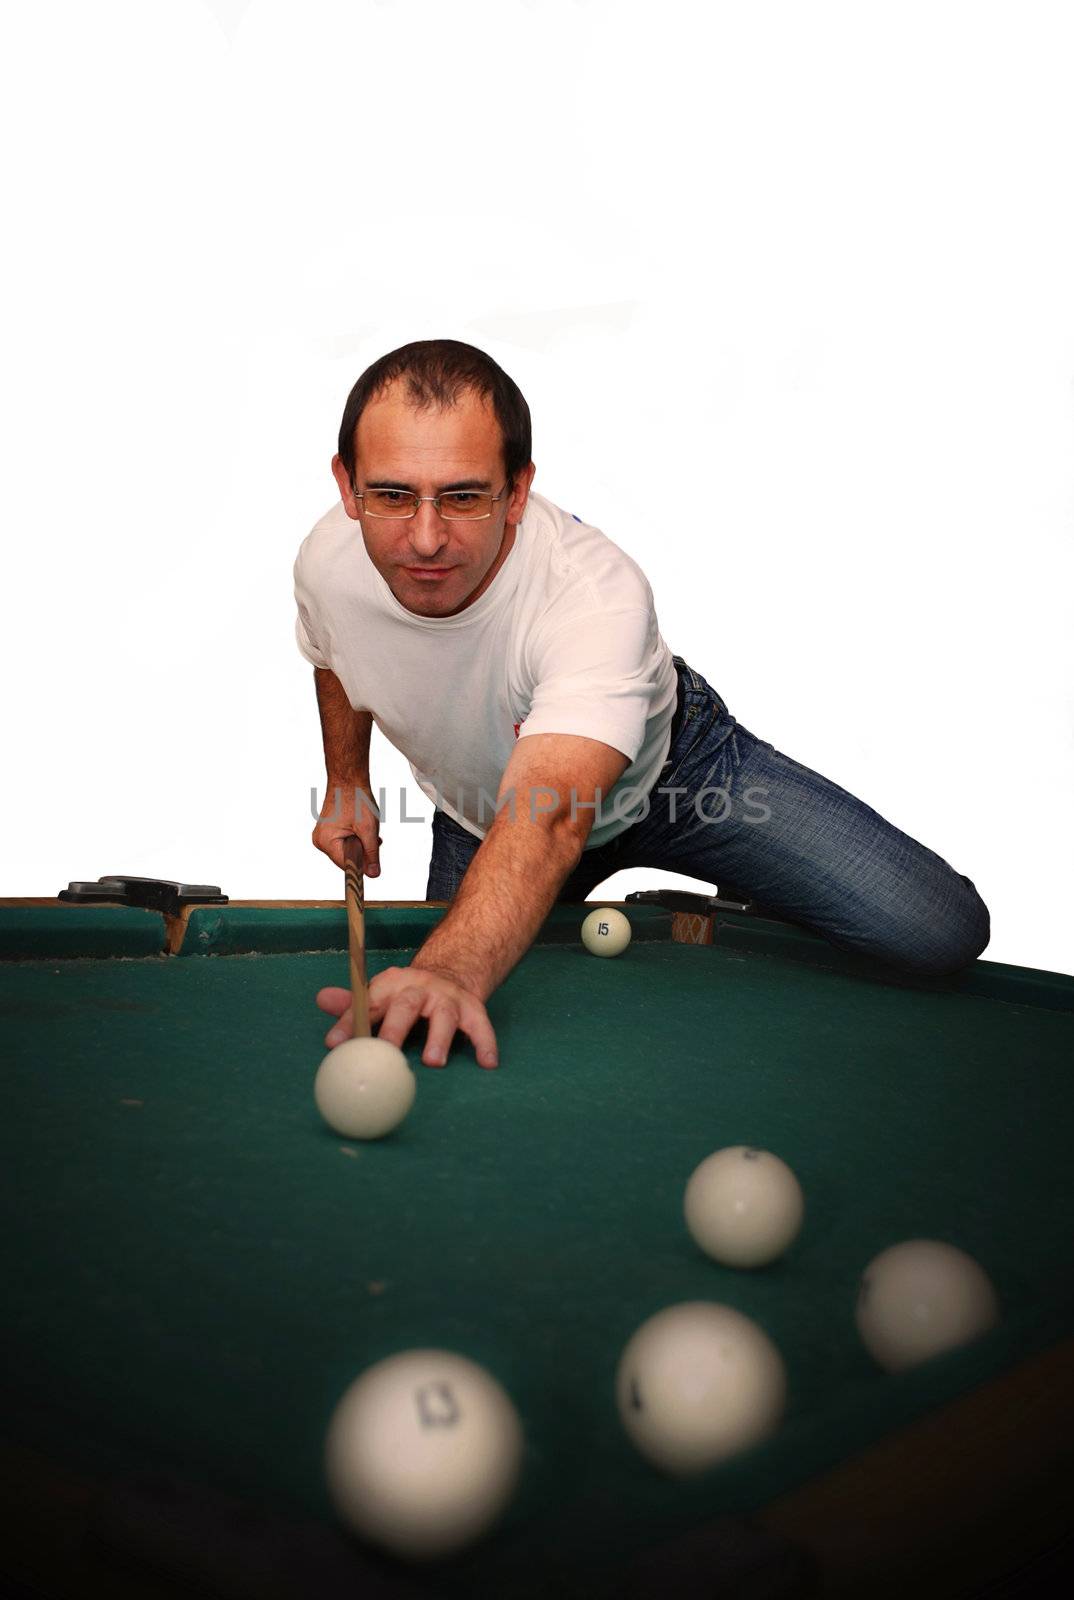 Smiling man playing billiards. by lapichka